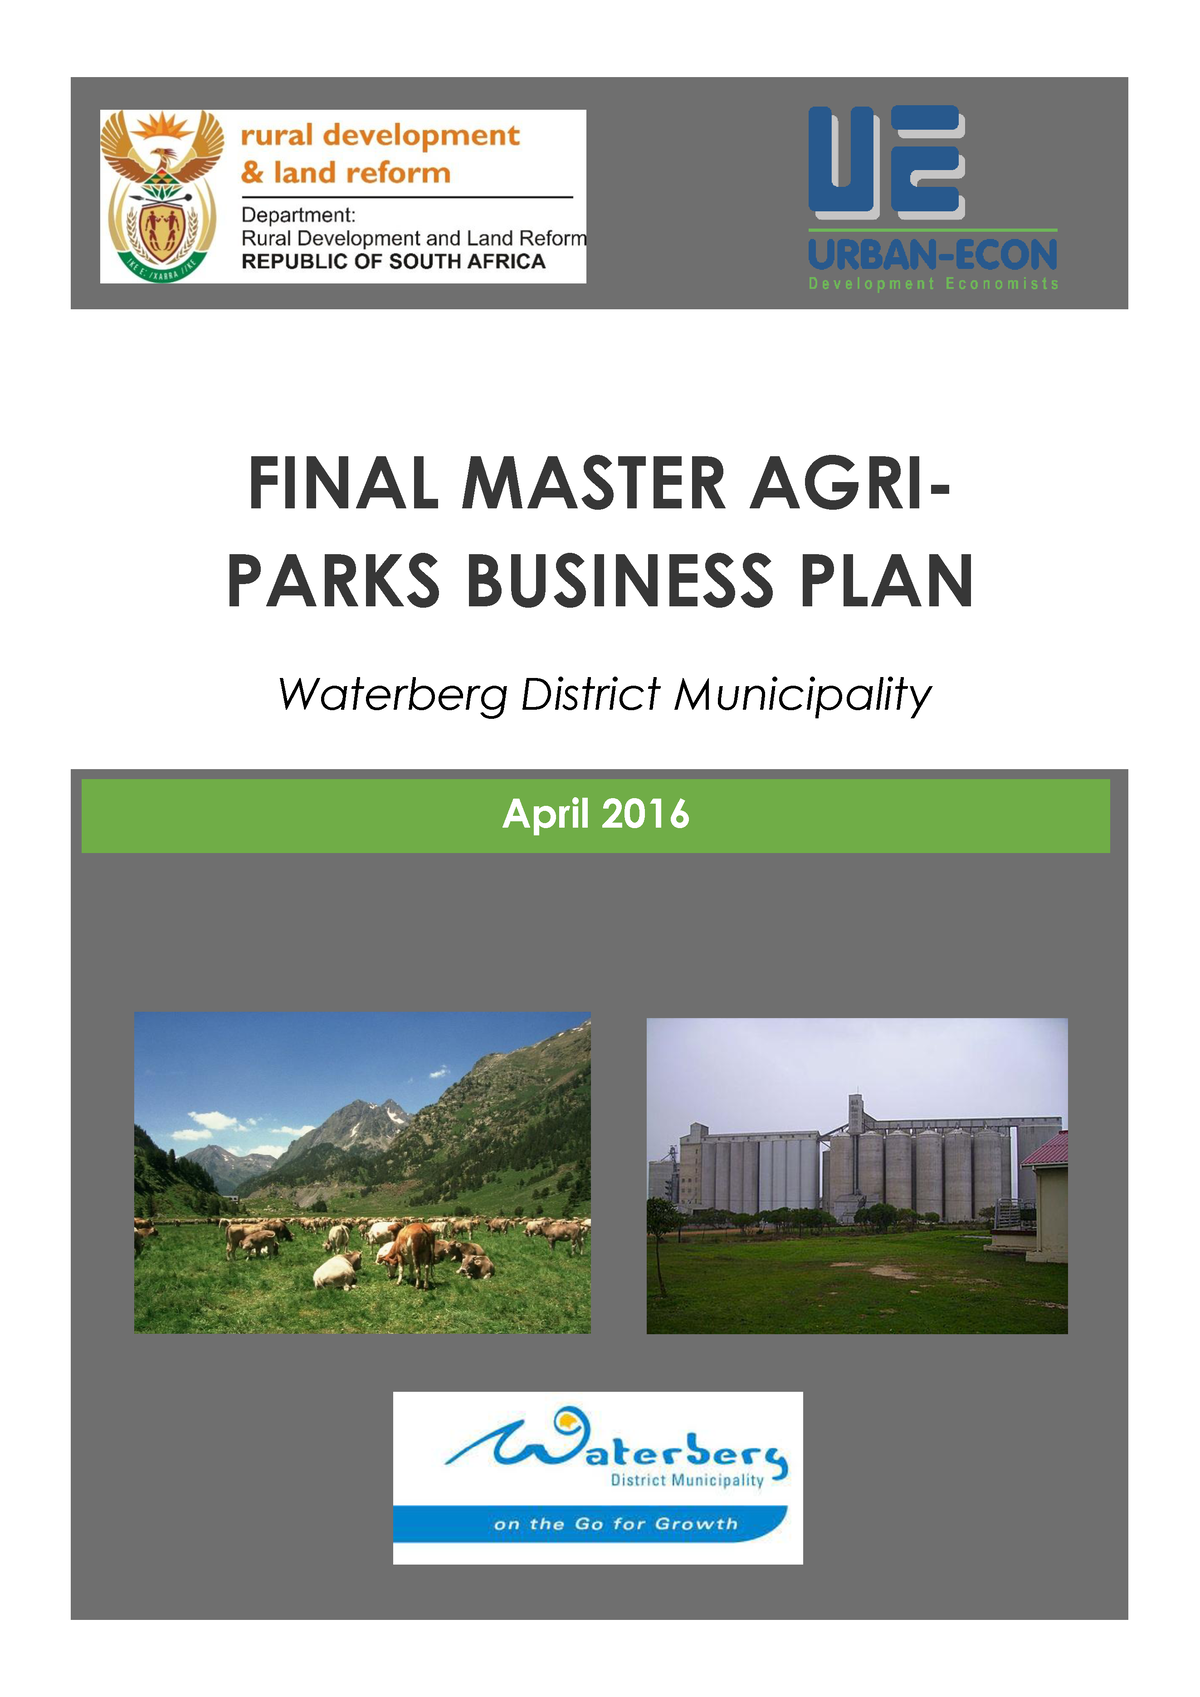 agri park business plan